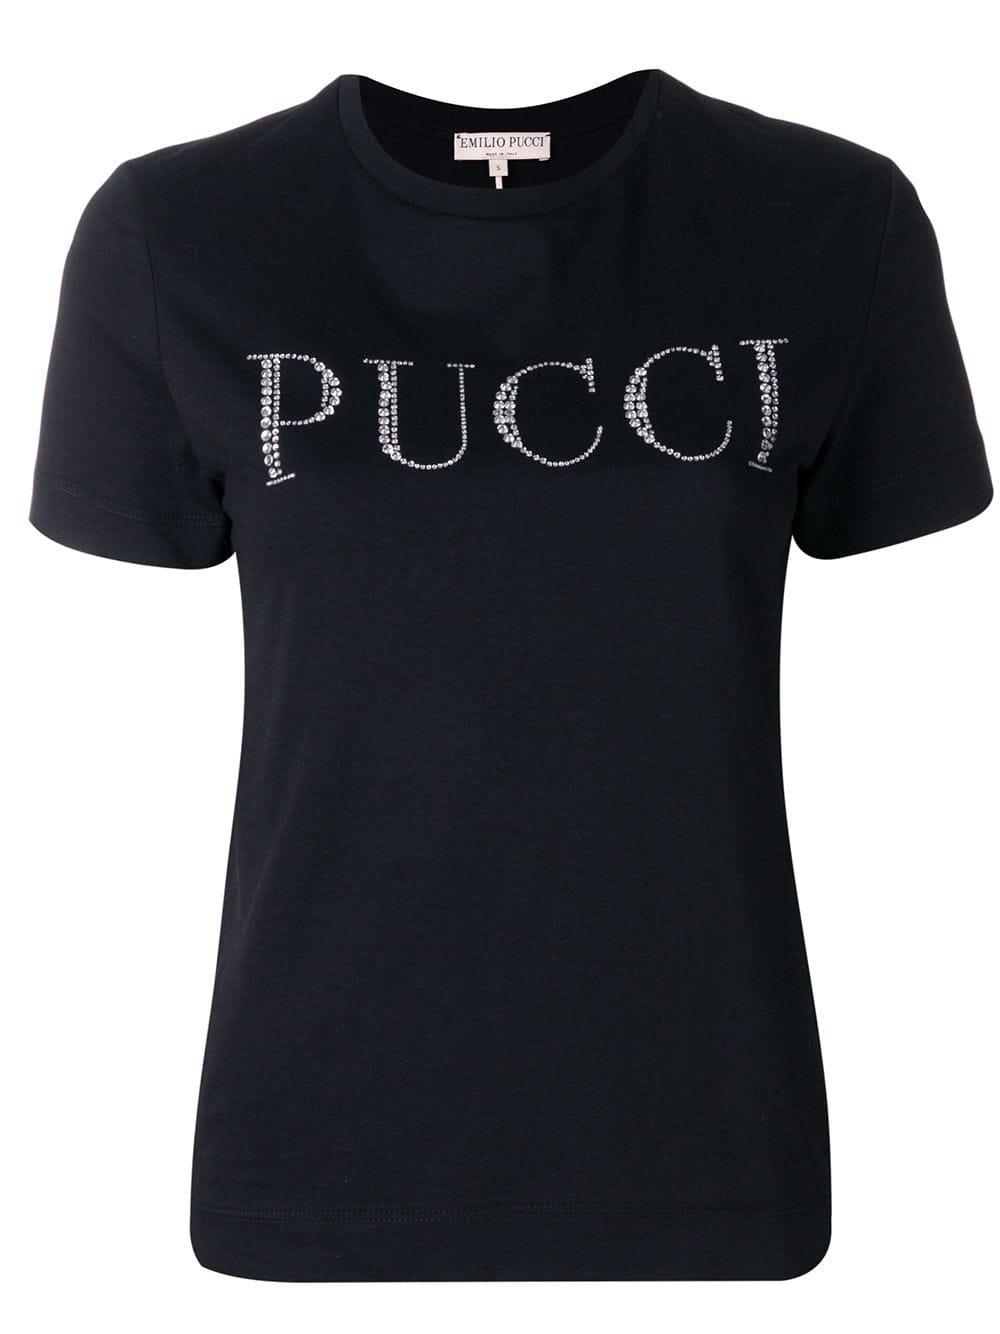 Emilio Pucci Crystal Embellished Logo T-shirt in Black - Lyst